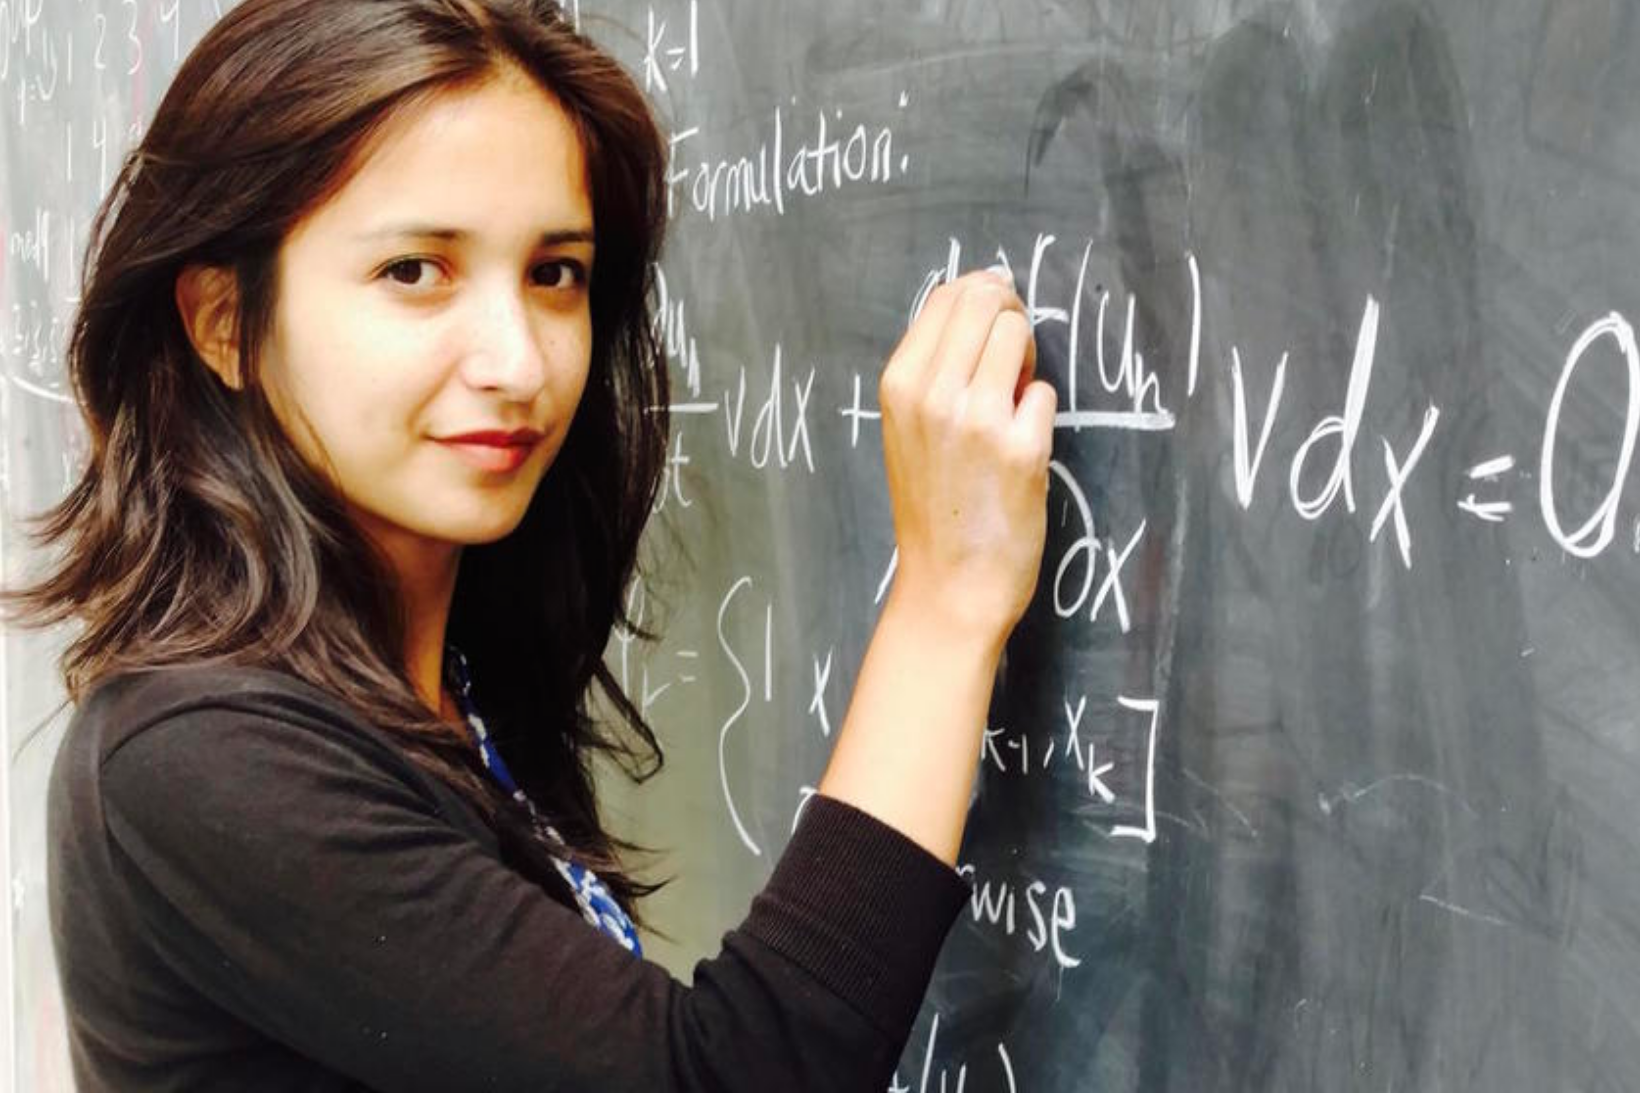 photo of student writing on chalkboard